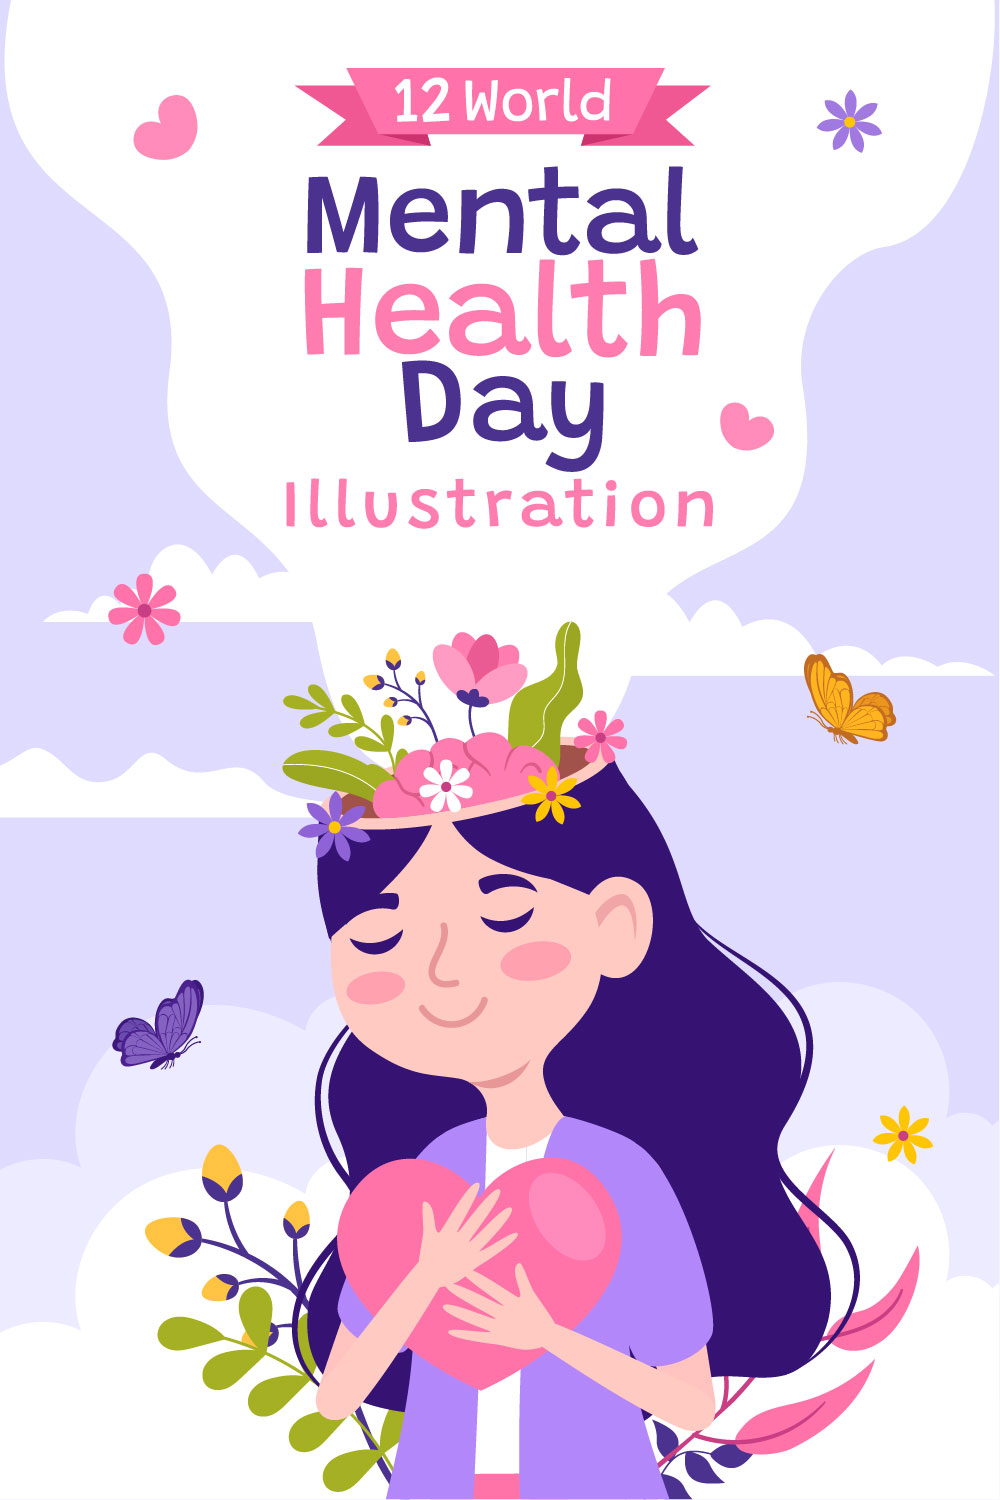 12 World Mental Health Day Illustration pinterest preview image.